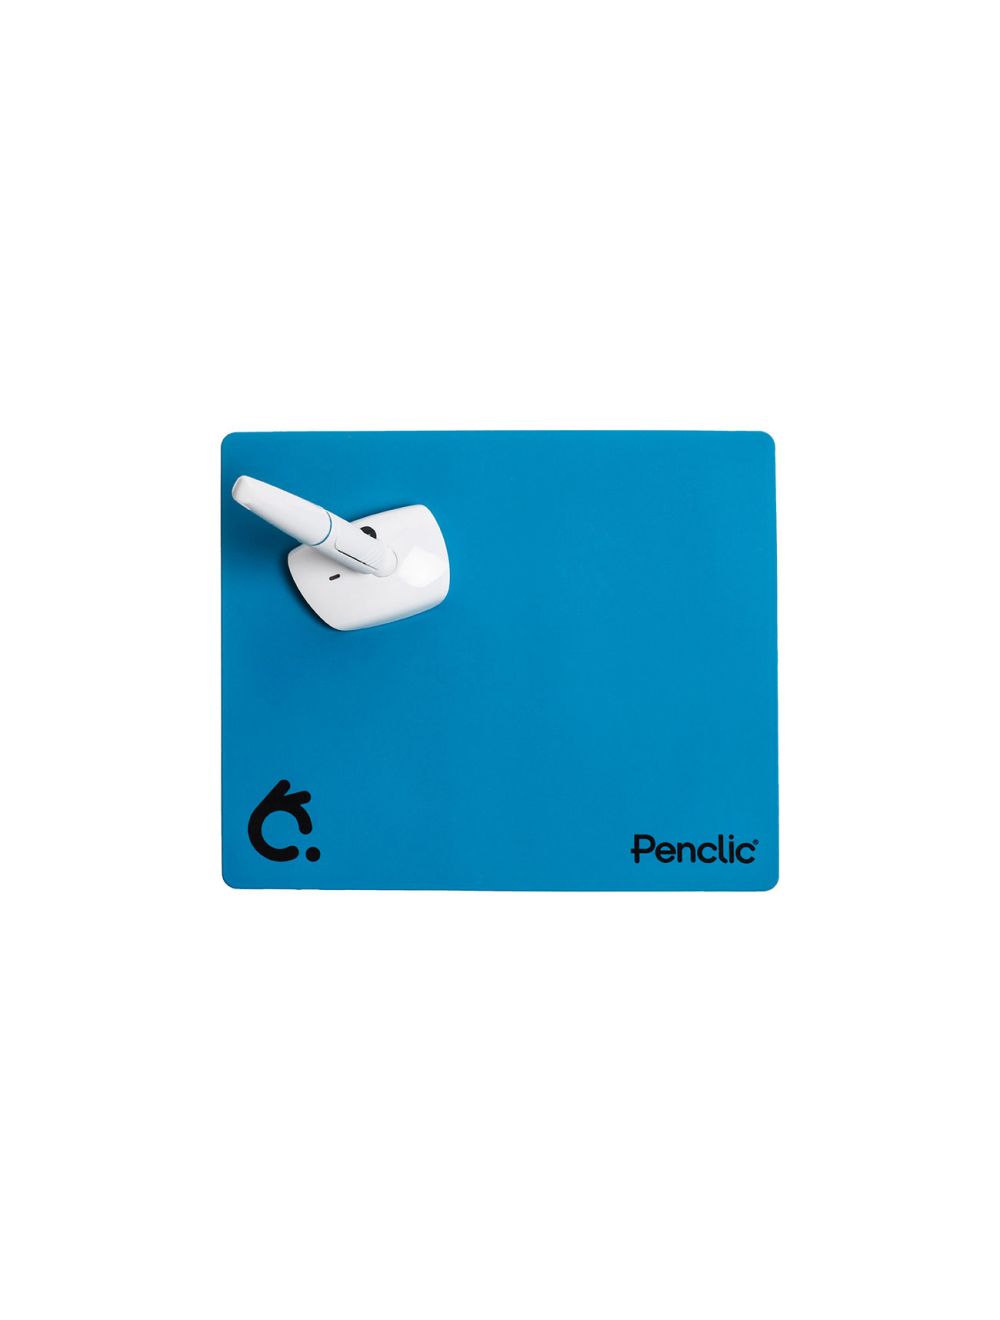 Penclic Mousepad M2